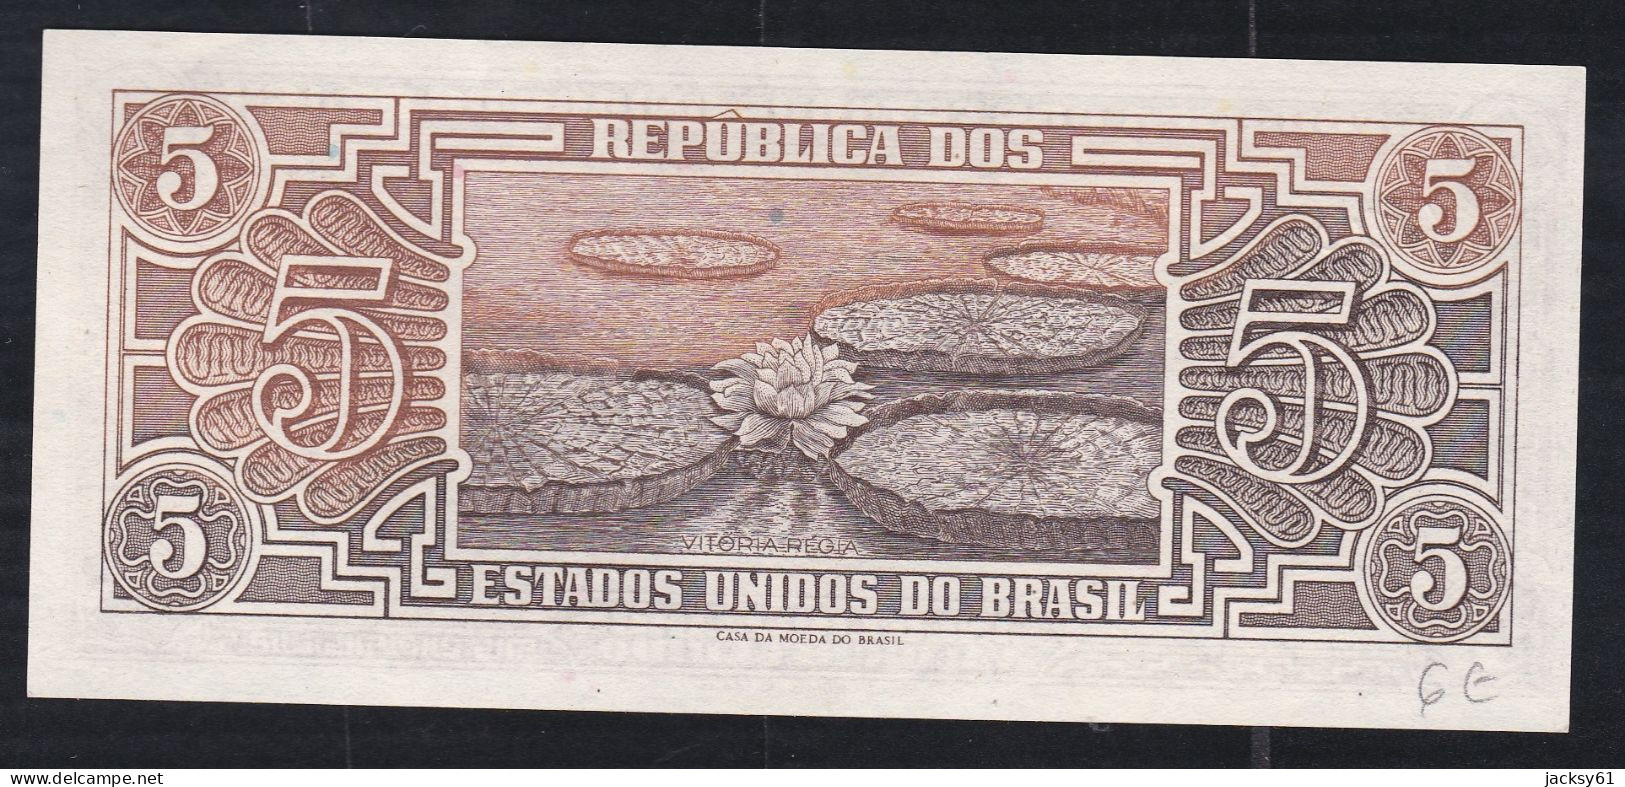 5 Cruzeiros - Republica Dos - Brazil